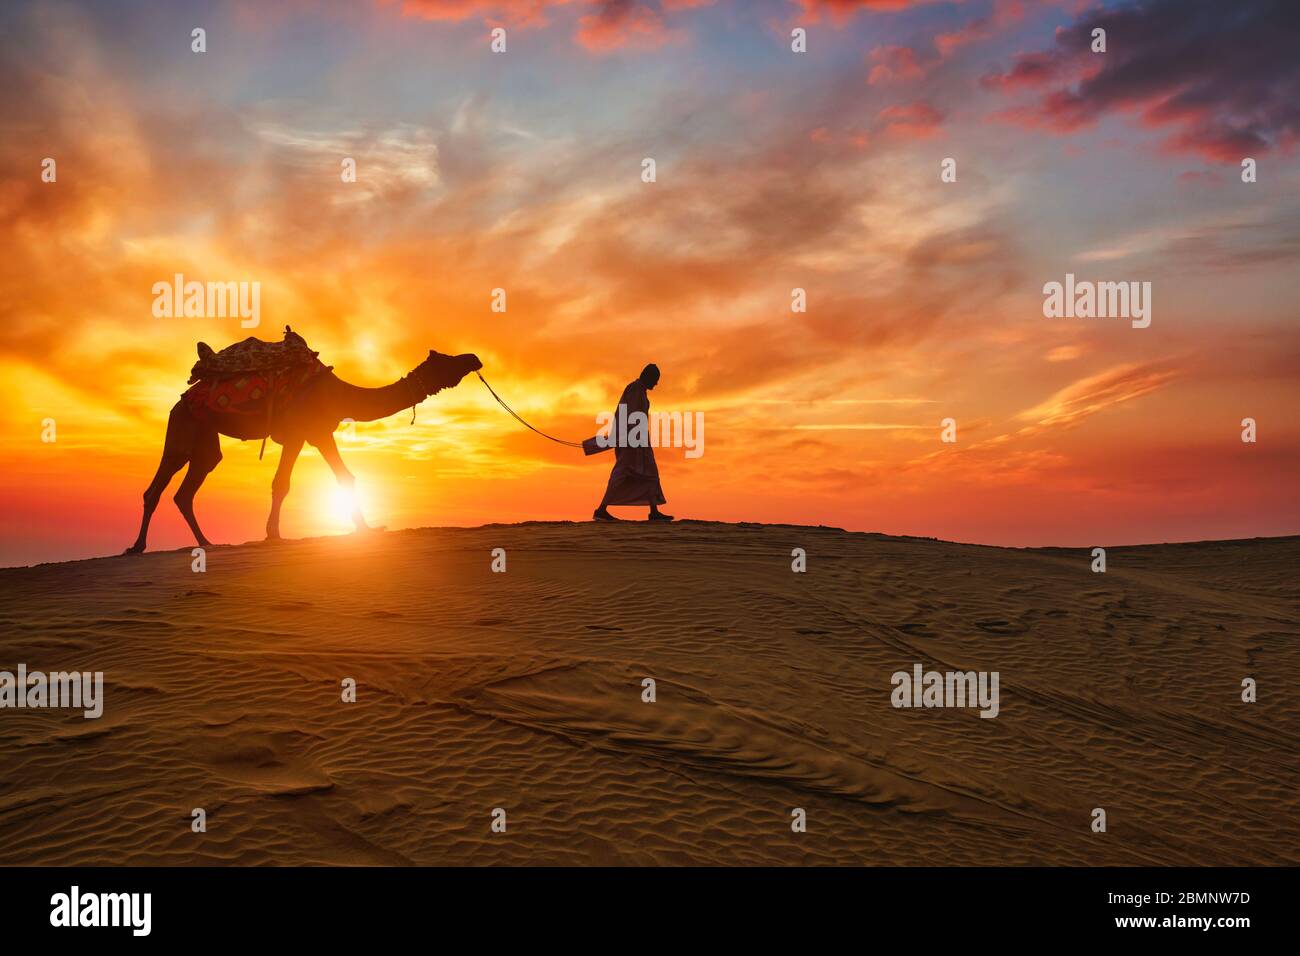 Camaleonte indiano con silhouette in cammello sulle dune al tramonto. Jaisalmer, Rajasthan, India Foto Stock